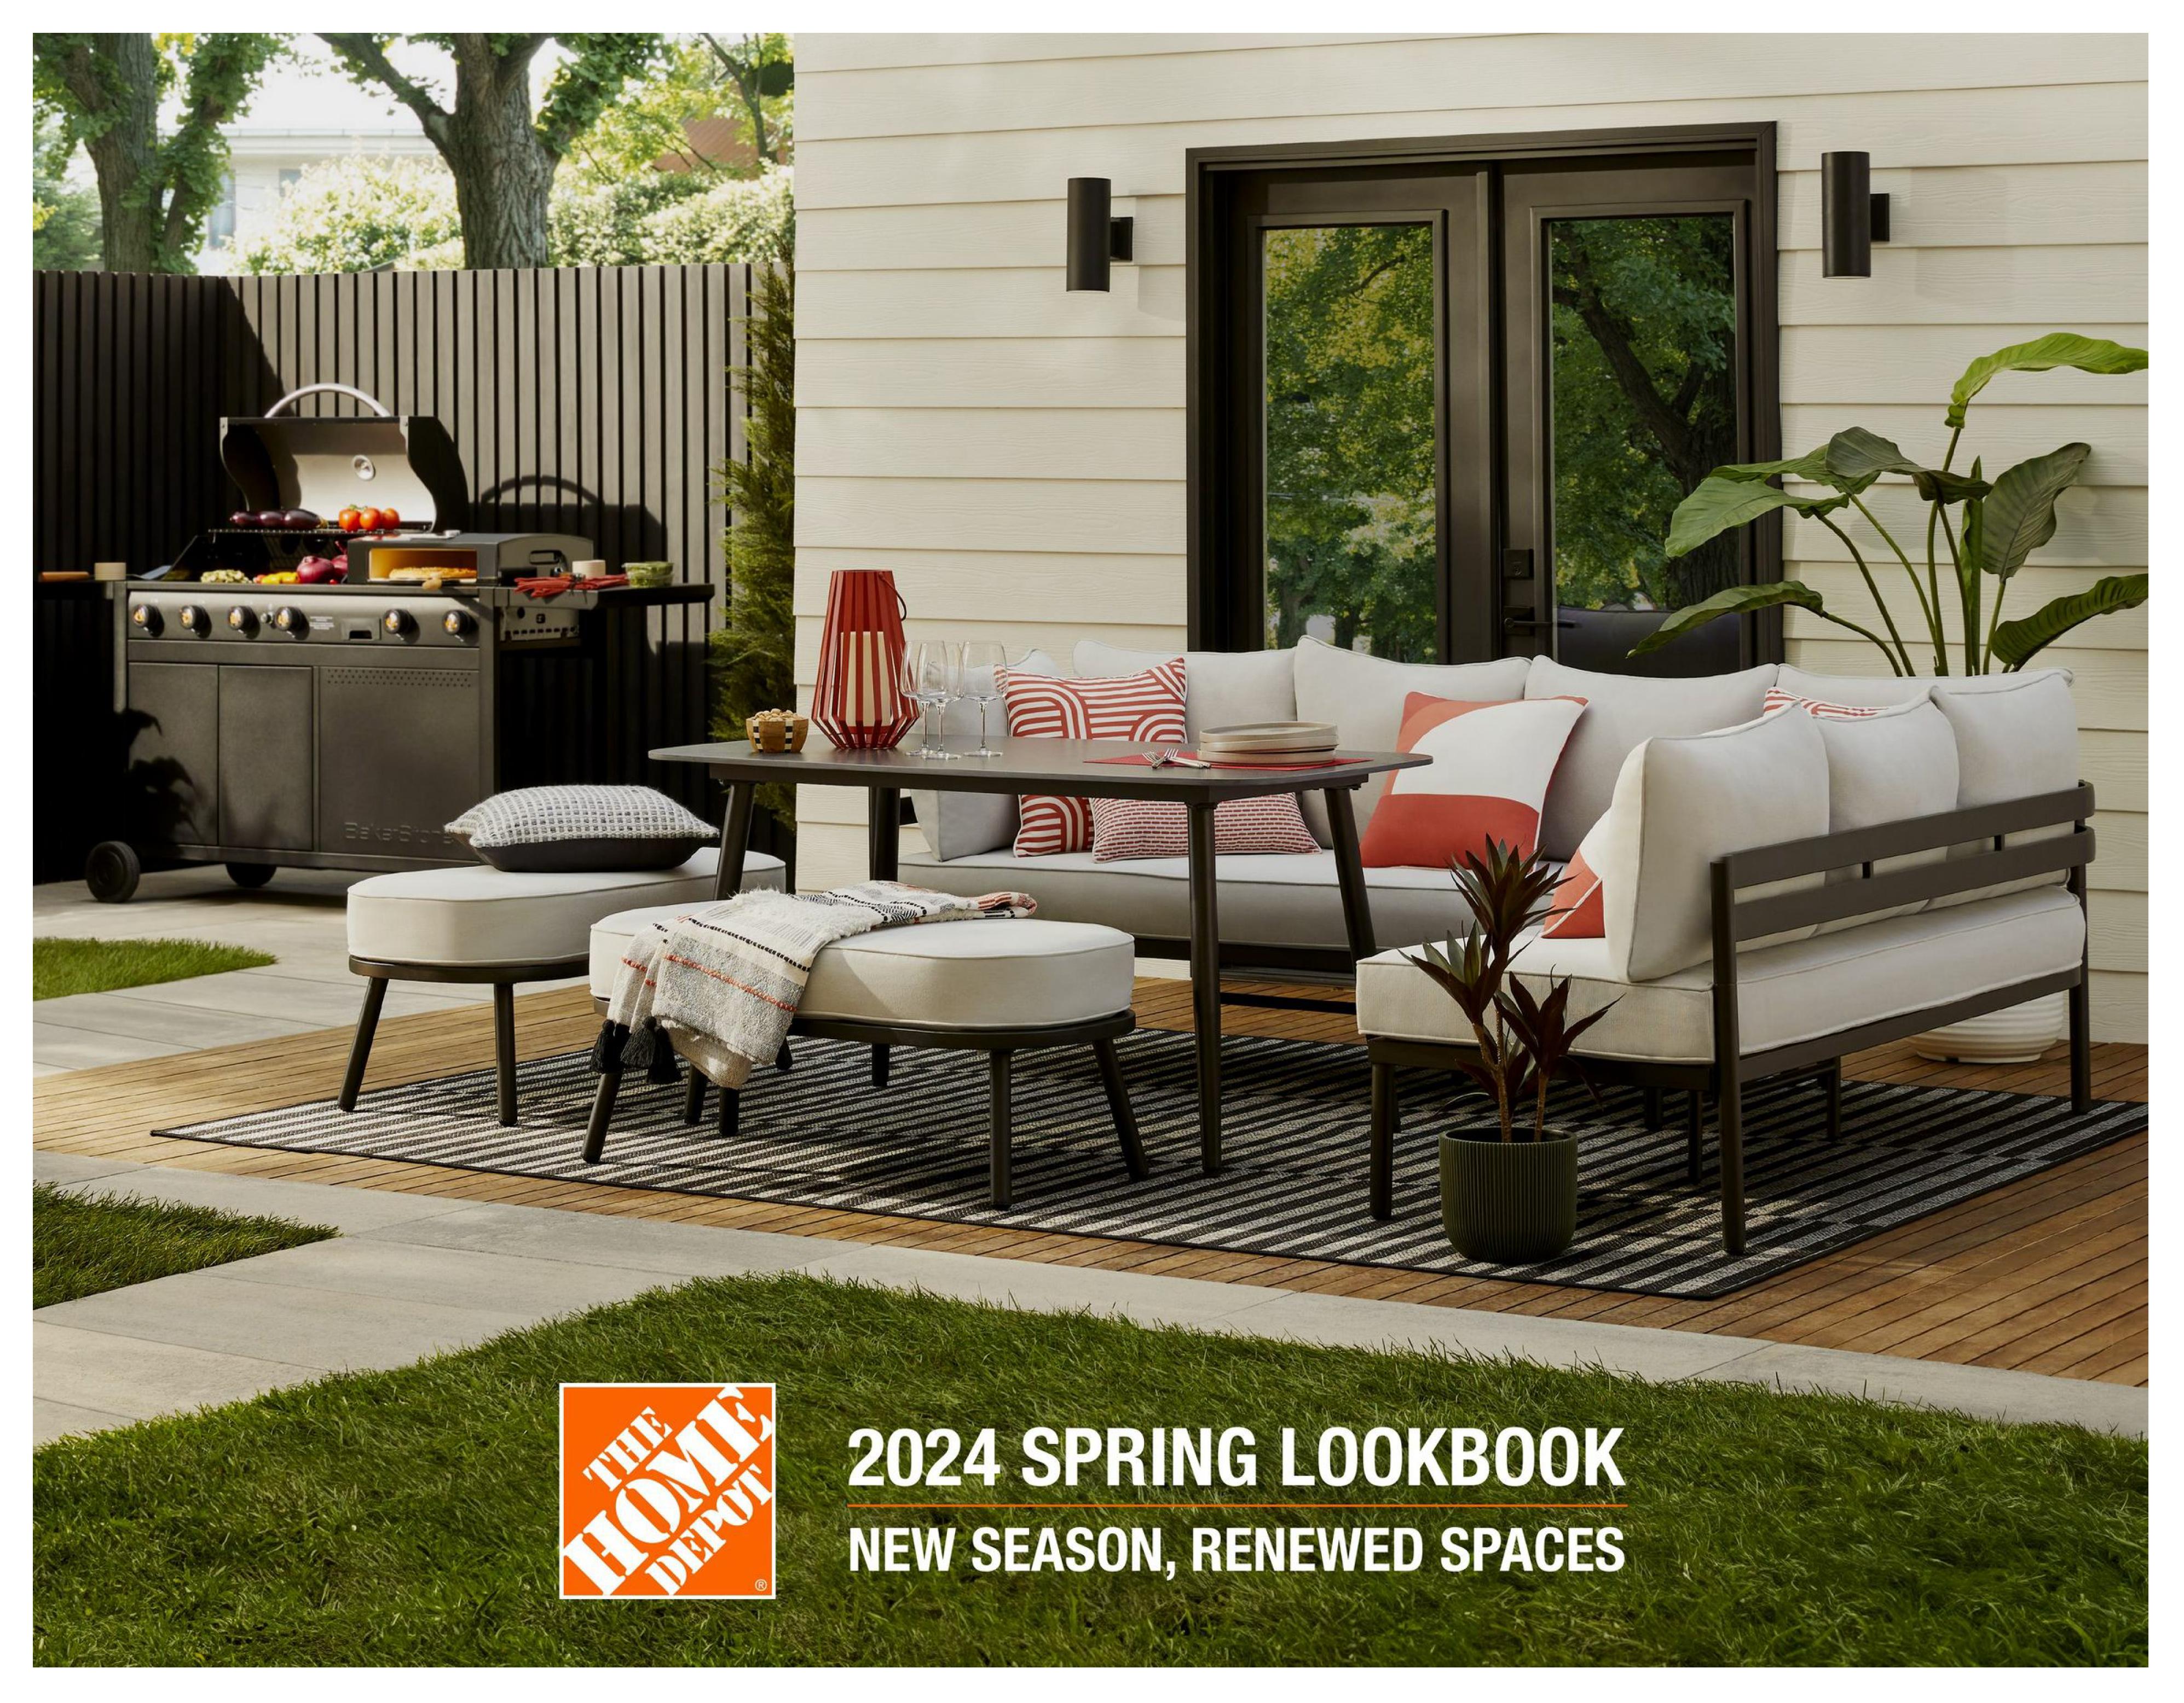 Home Depot - Spring LookBook 2024